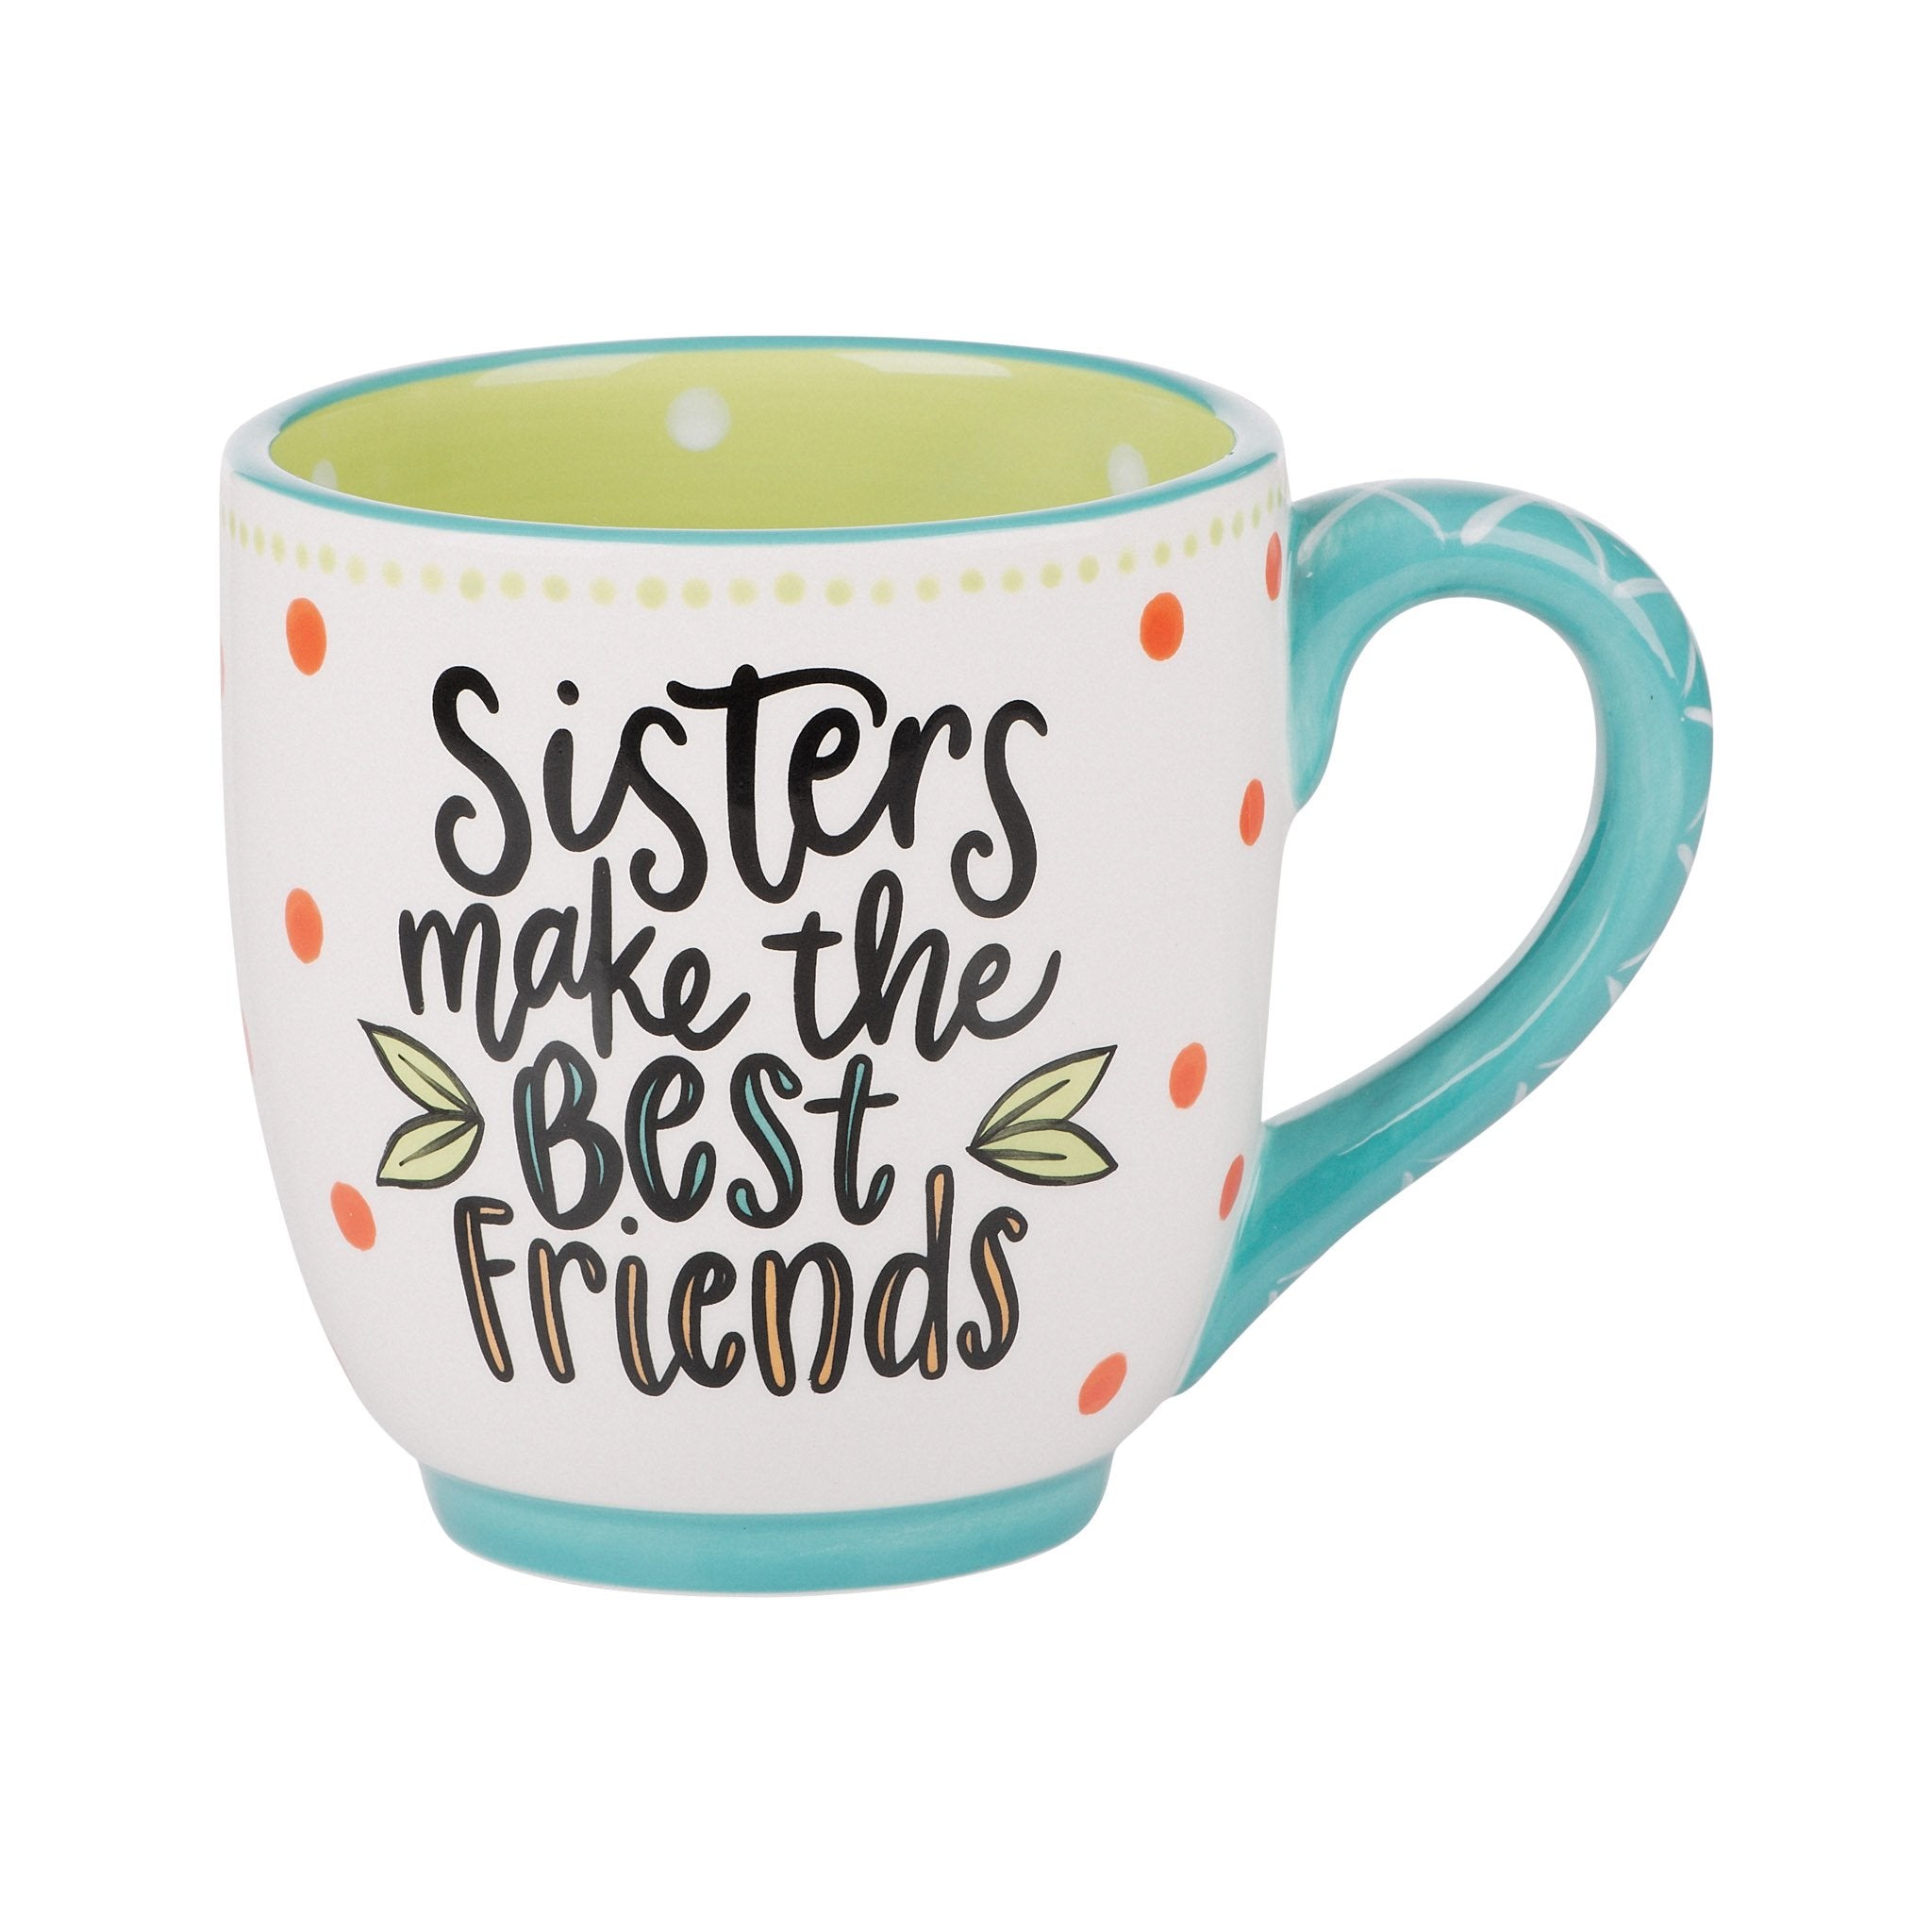 Sisters Make the Best Friends Mug